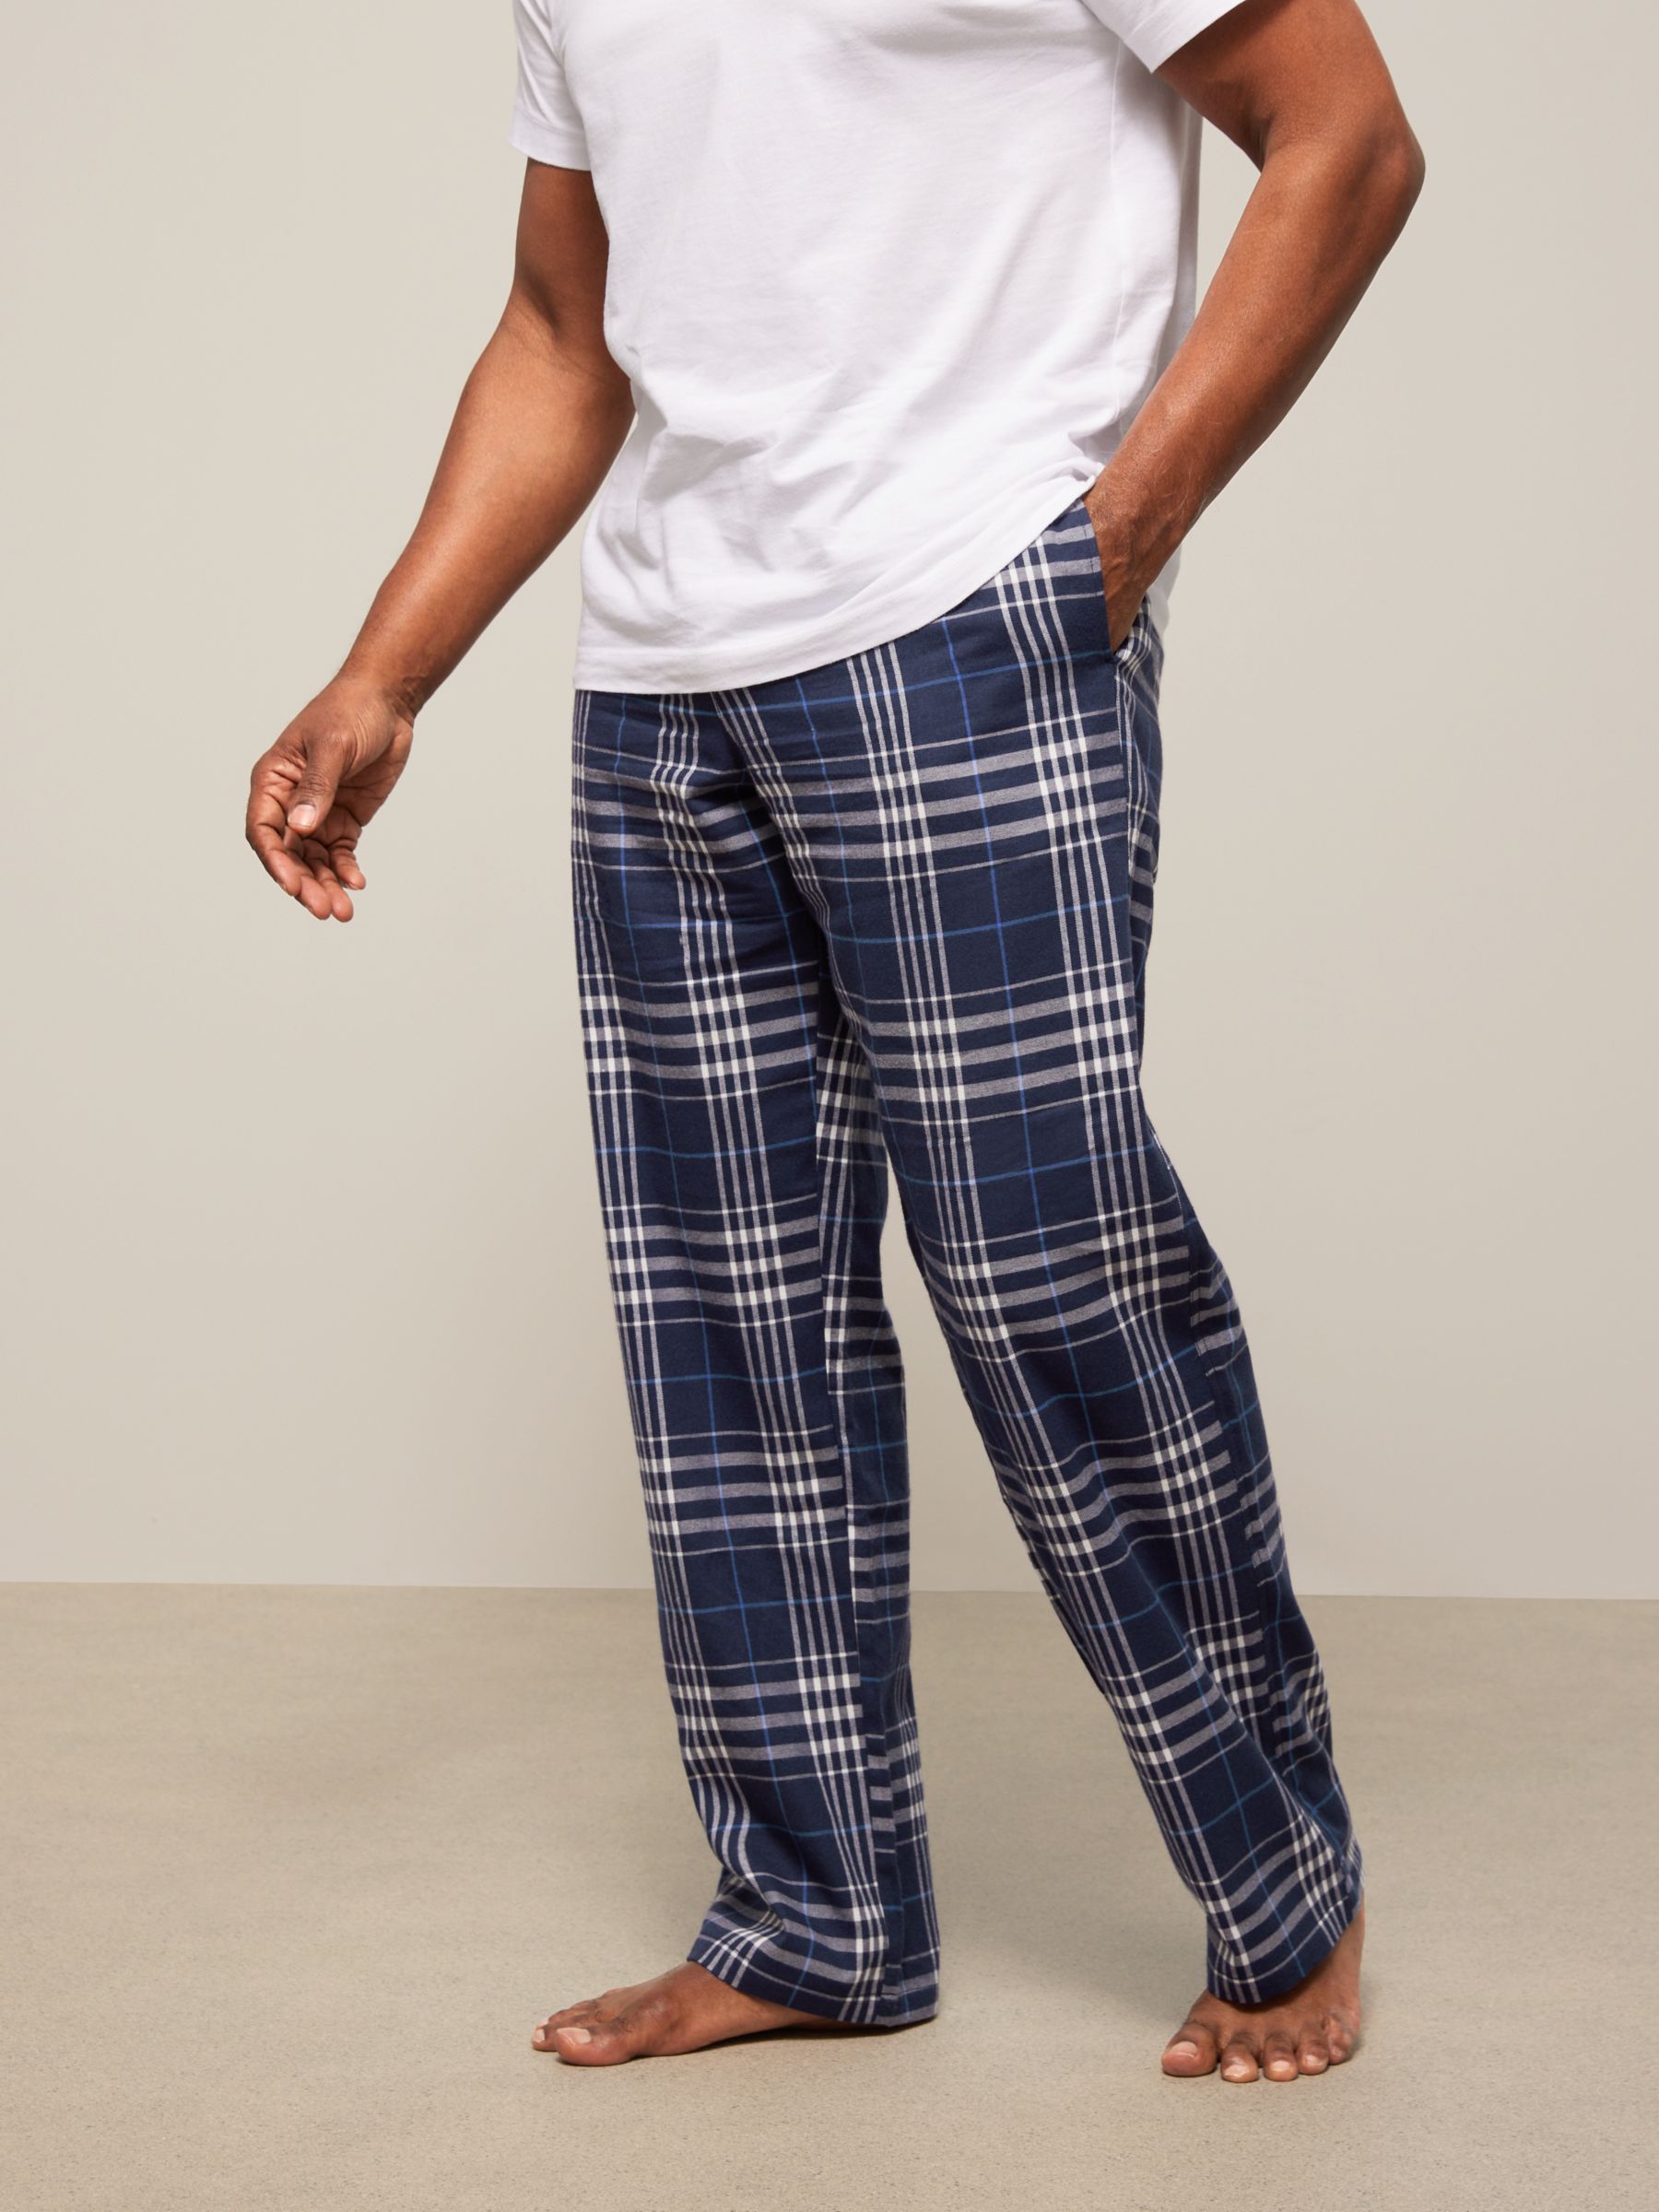 Best Deals Direct 2 Pack Mens Checkered Lounge Pants Trousers Pyjamas Bottoms Cotton Blend